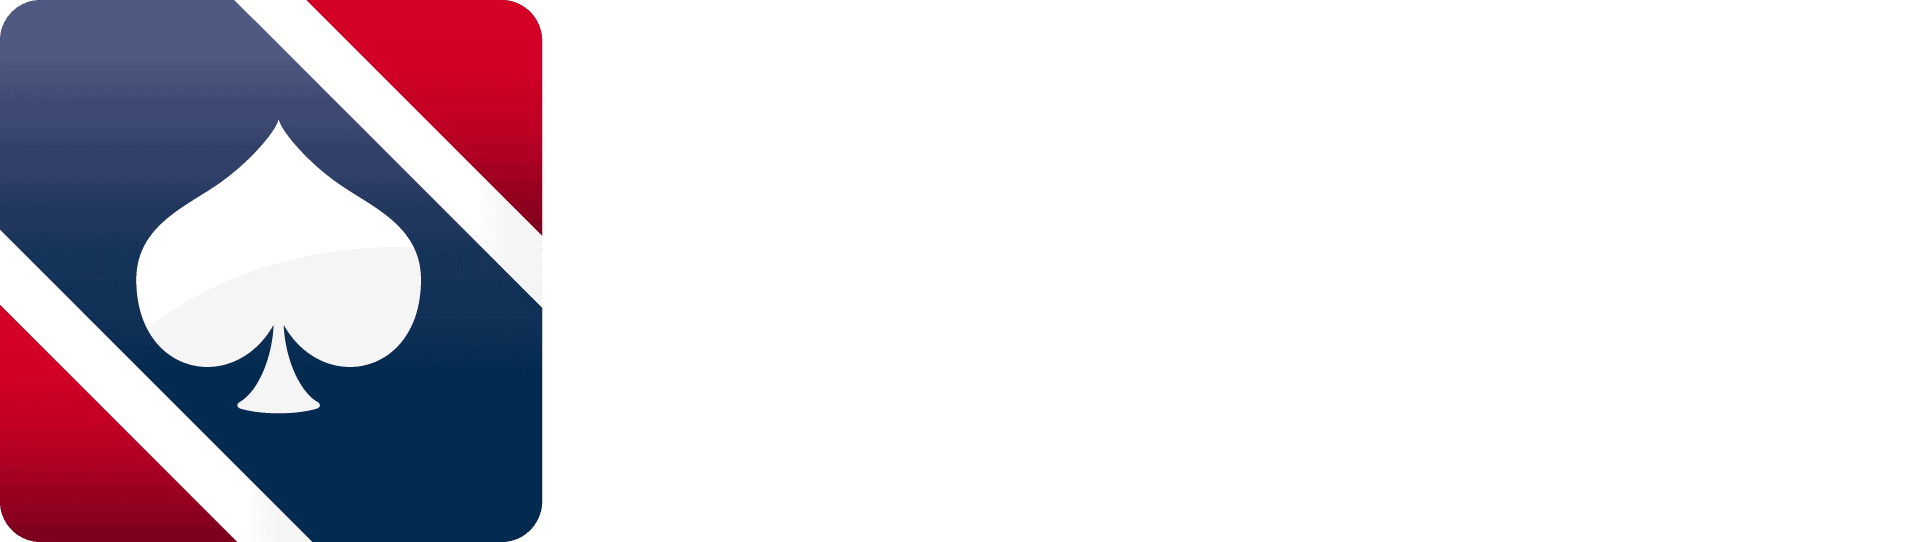 Norgesmester i poker 2024 logo